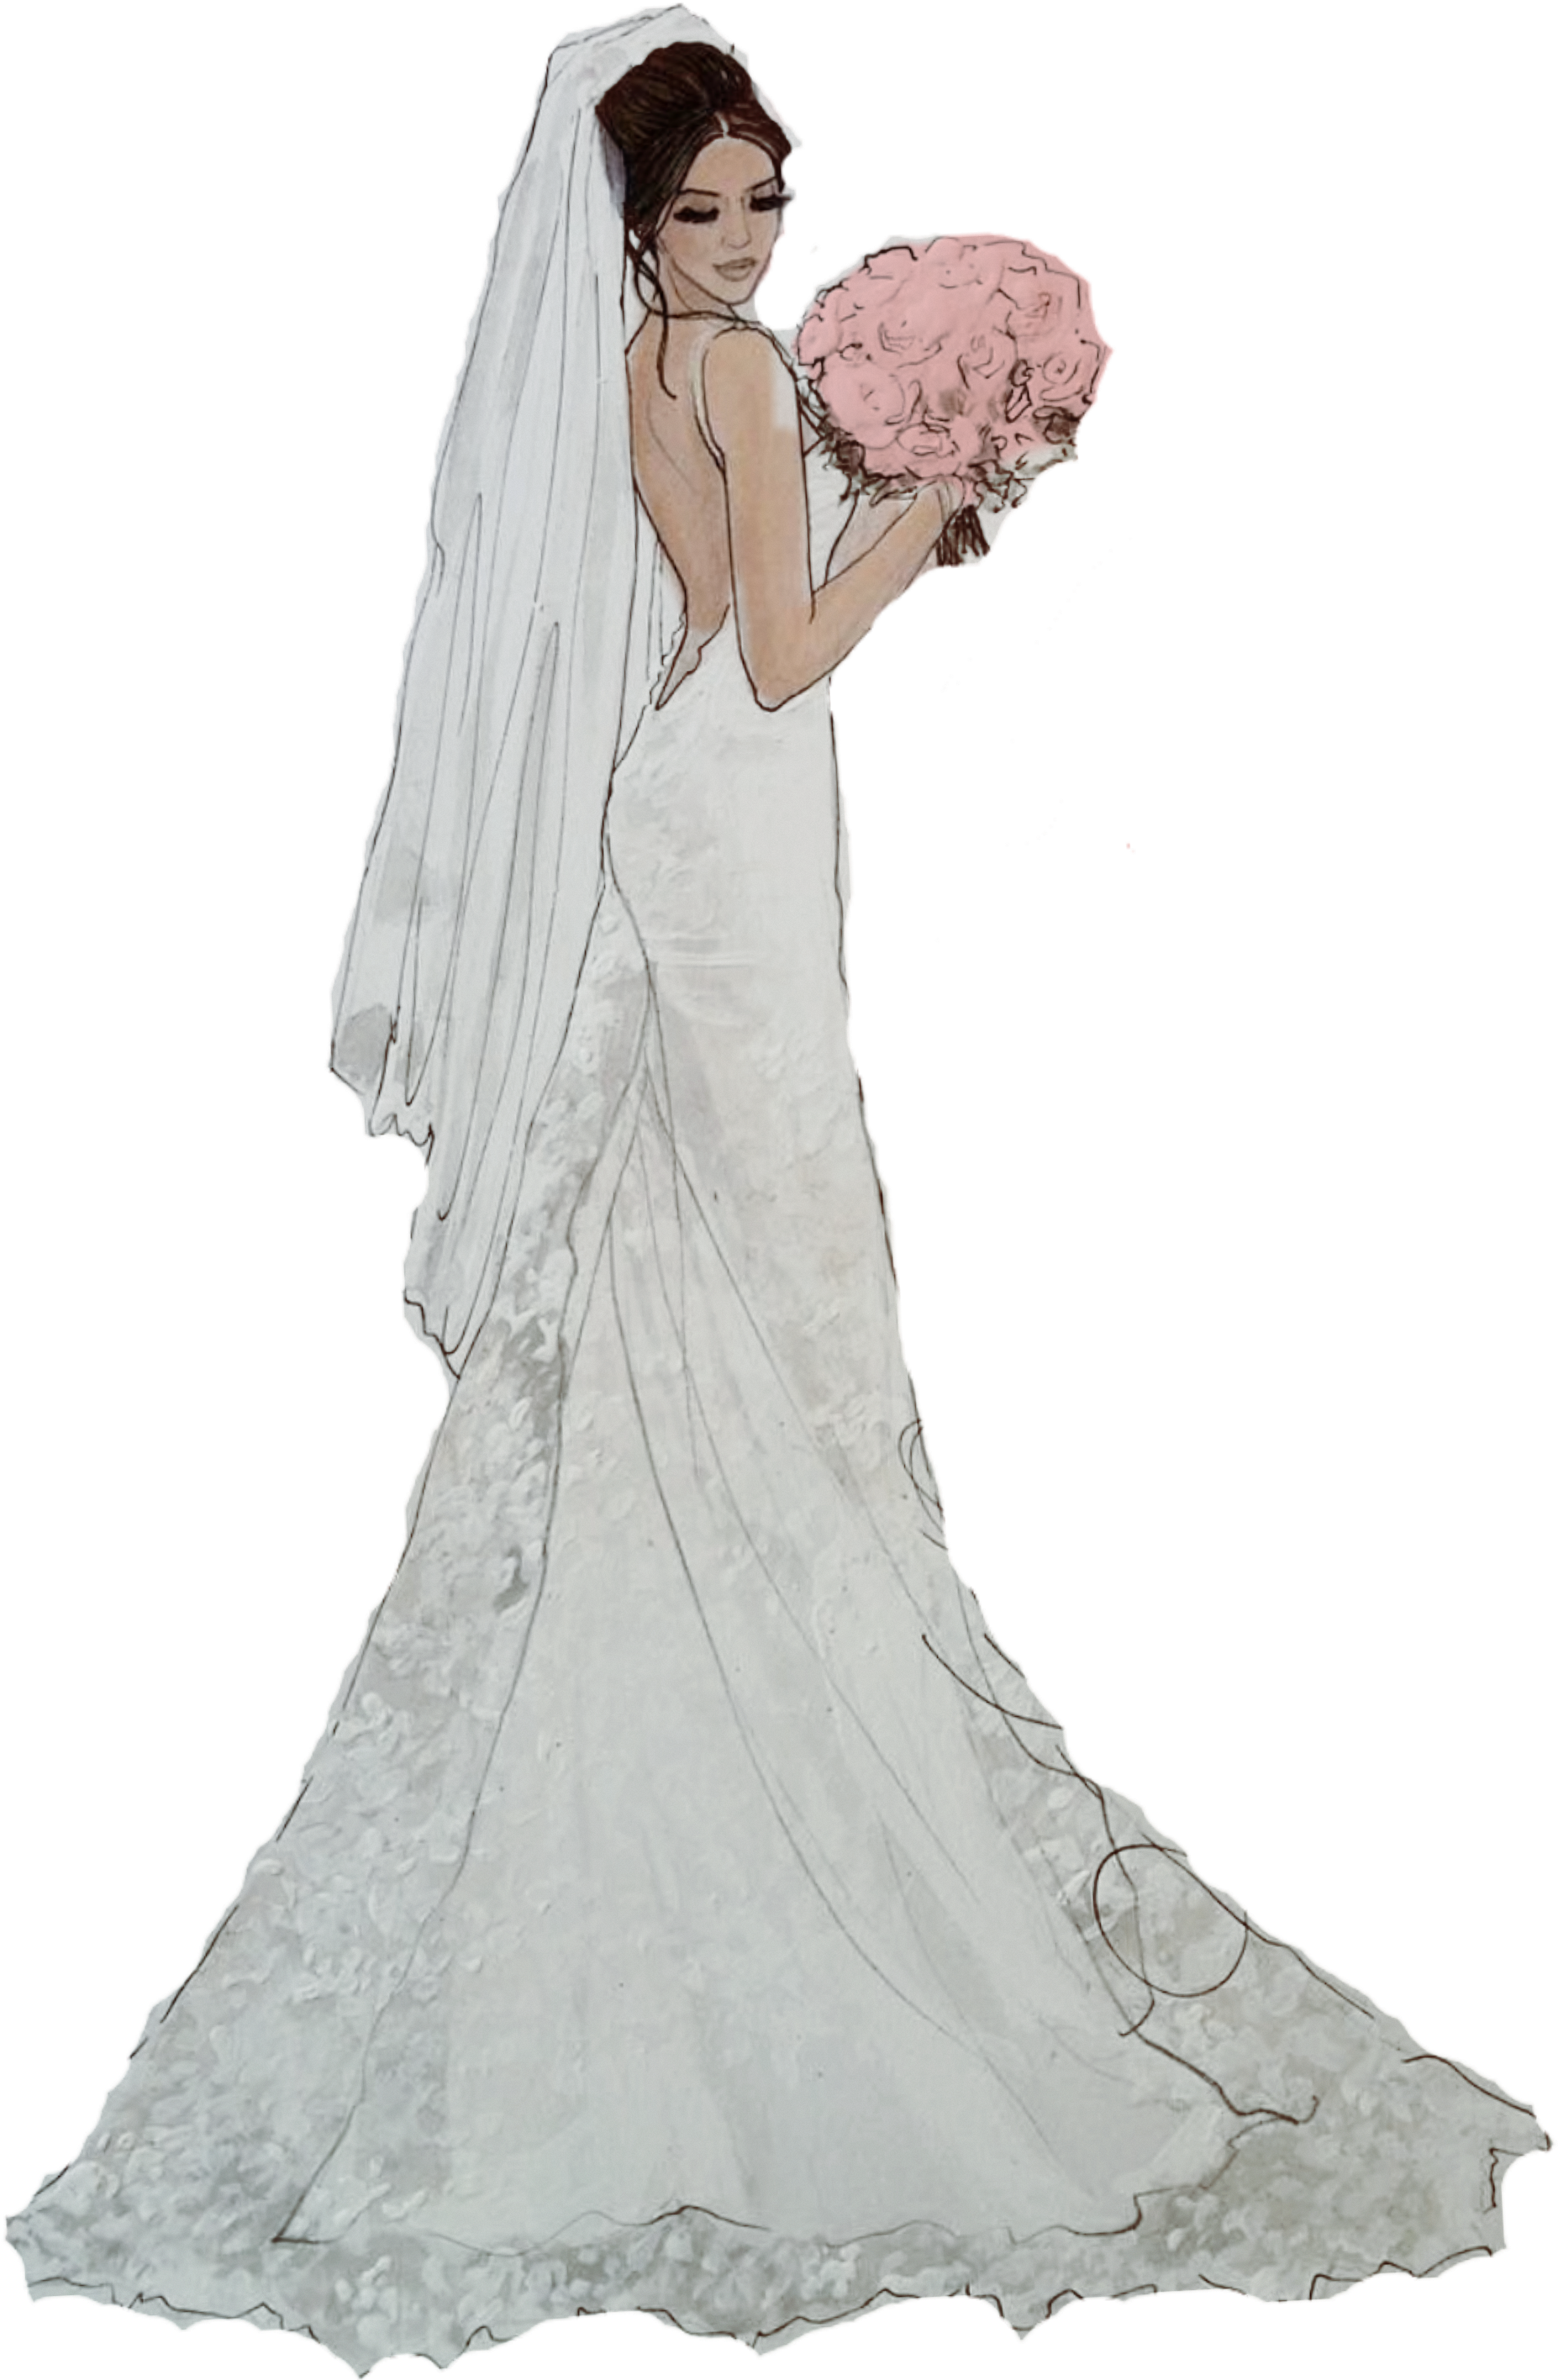 Elegant Bridein White Gownwith Bouquet